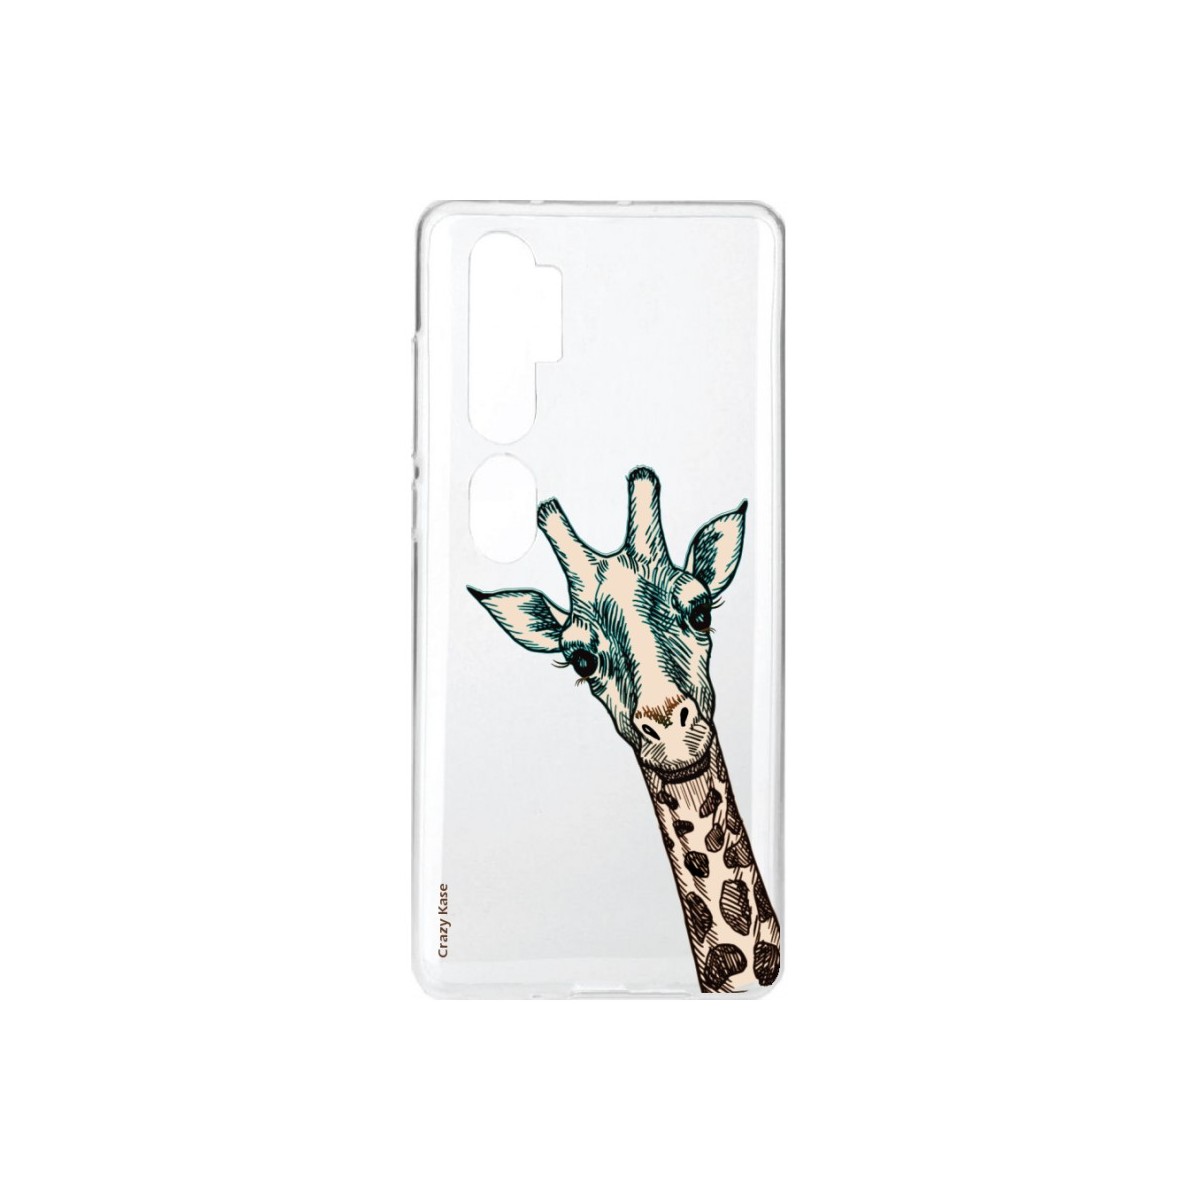 Coque pour Xiaomi Mi Note 10 souple Tête de Girafe Crazy Kase